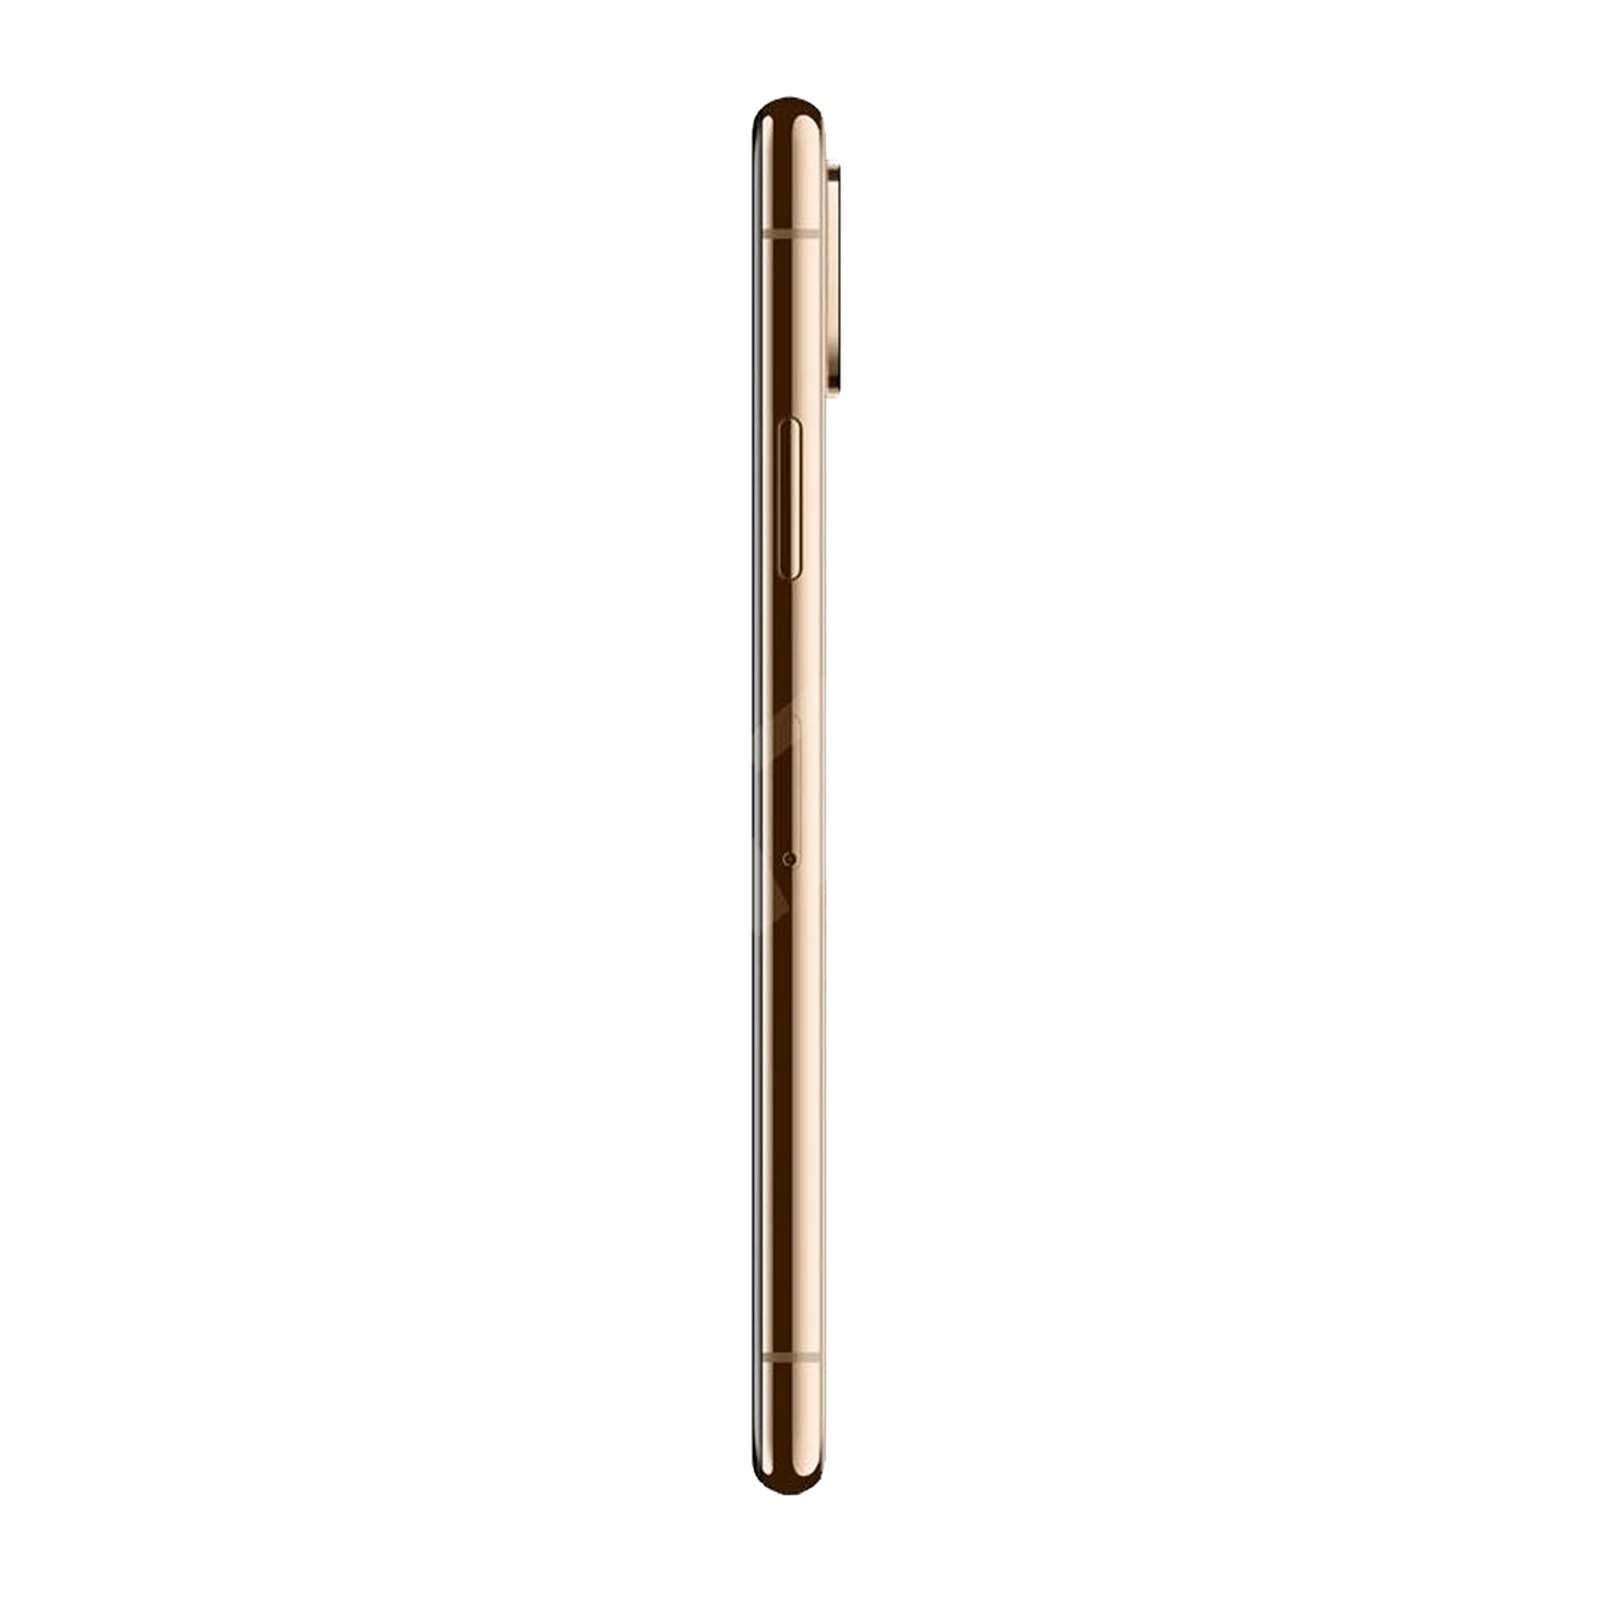 Apple iPhone XS Max 256GB Gold – Loop Mobile - US